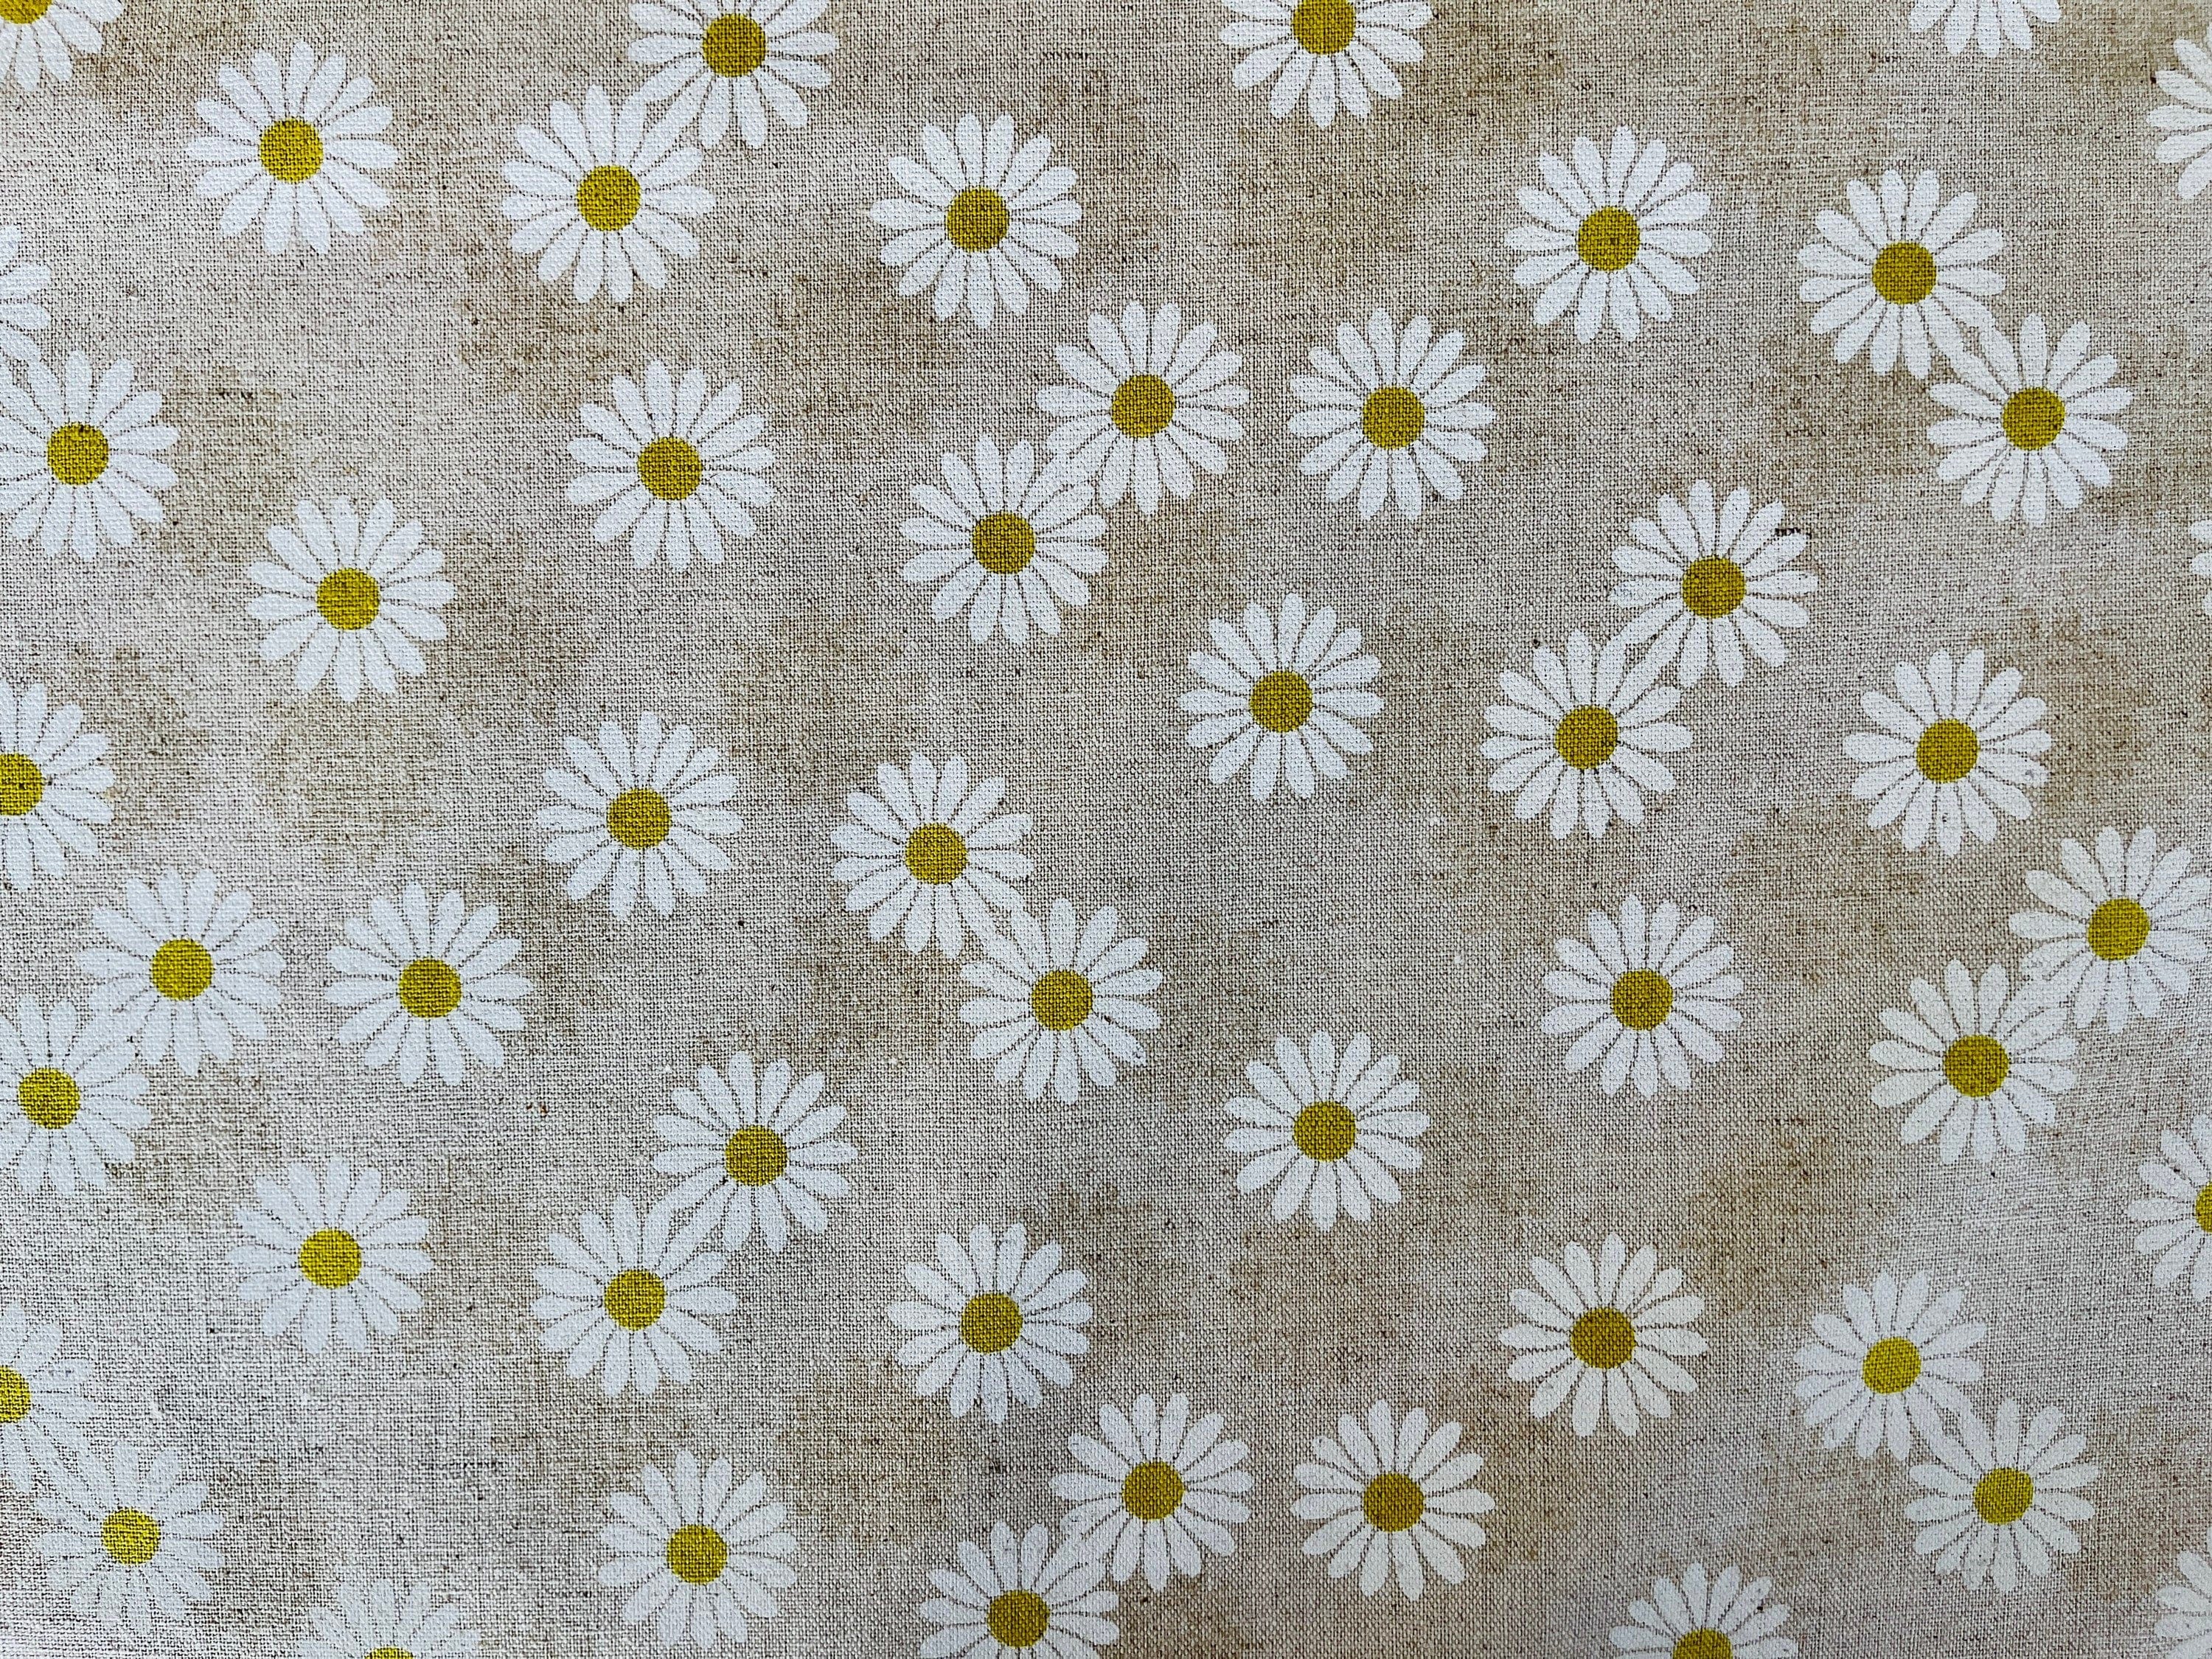 Daisy - Daisy Fabric - Cosmo - Japanese Textile - Cotton Linen Canvas - Printed Canvas - AP-21703-1A